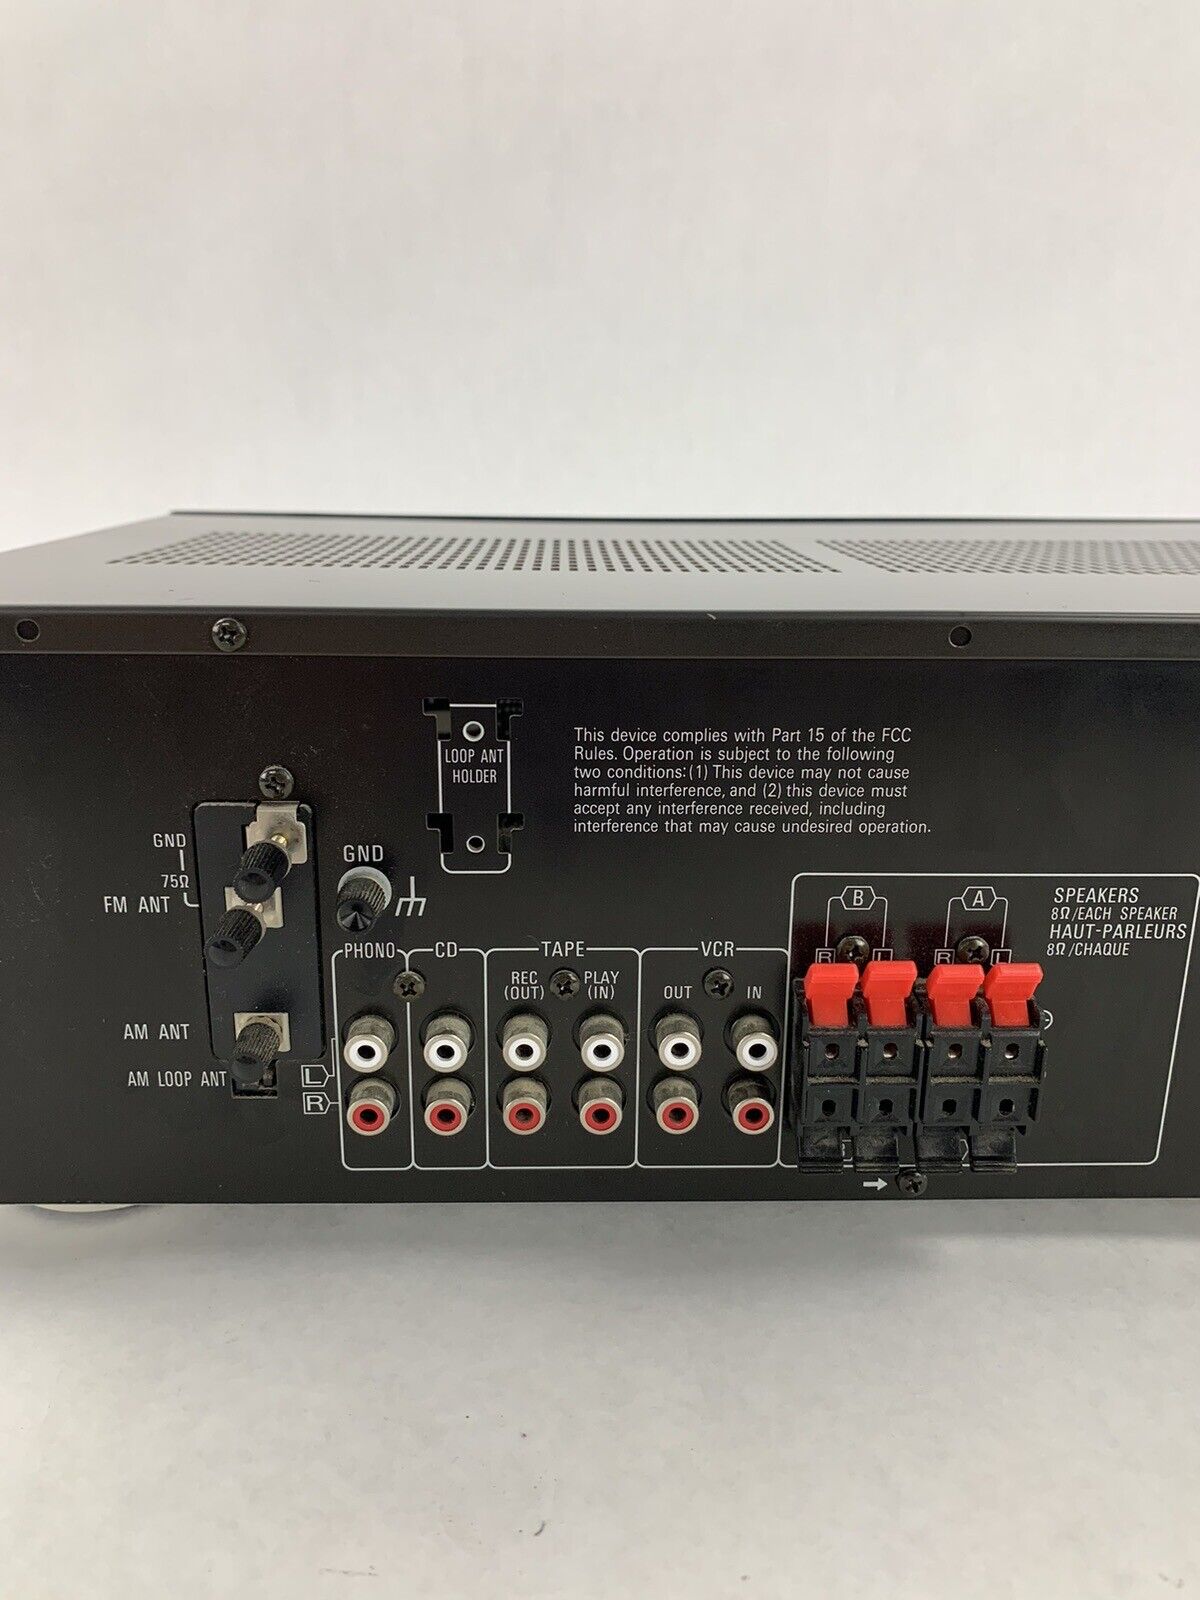 Technics AV Control Stereo Receiver Model SA-EX140